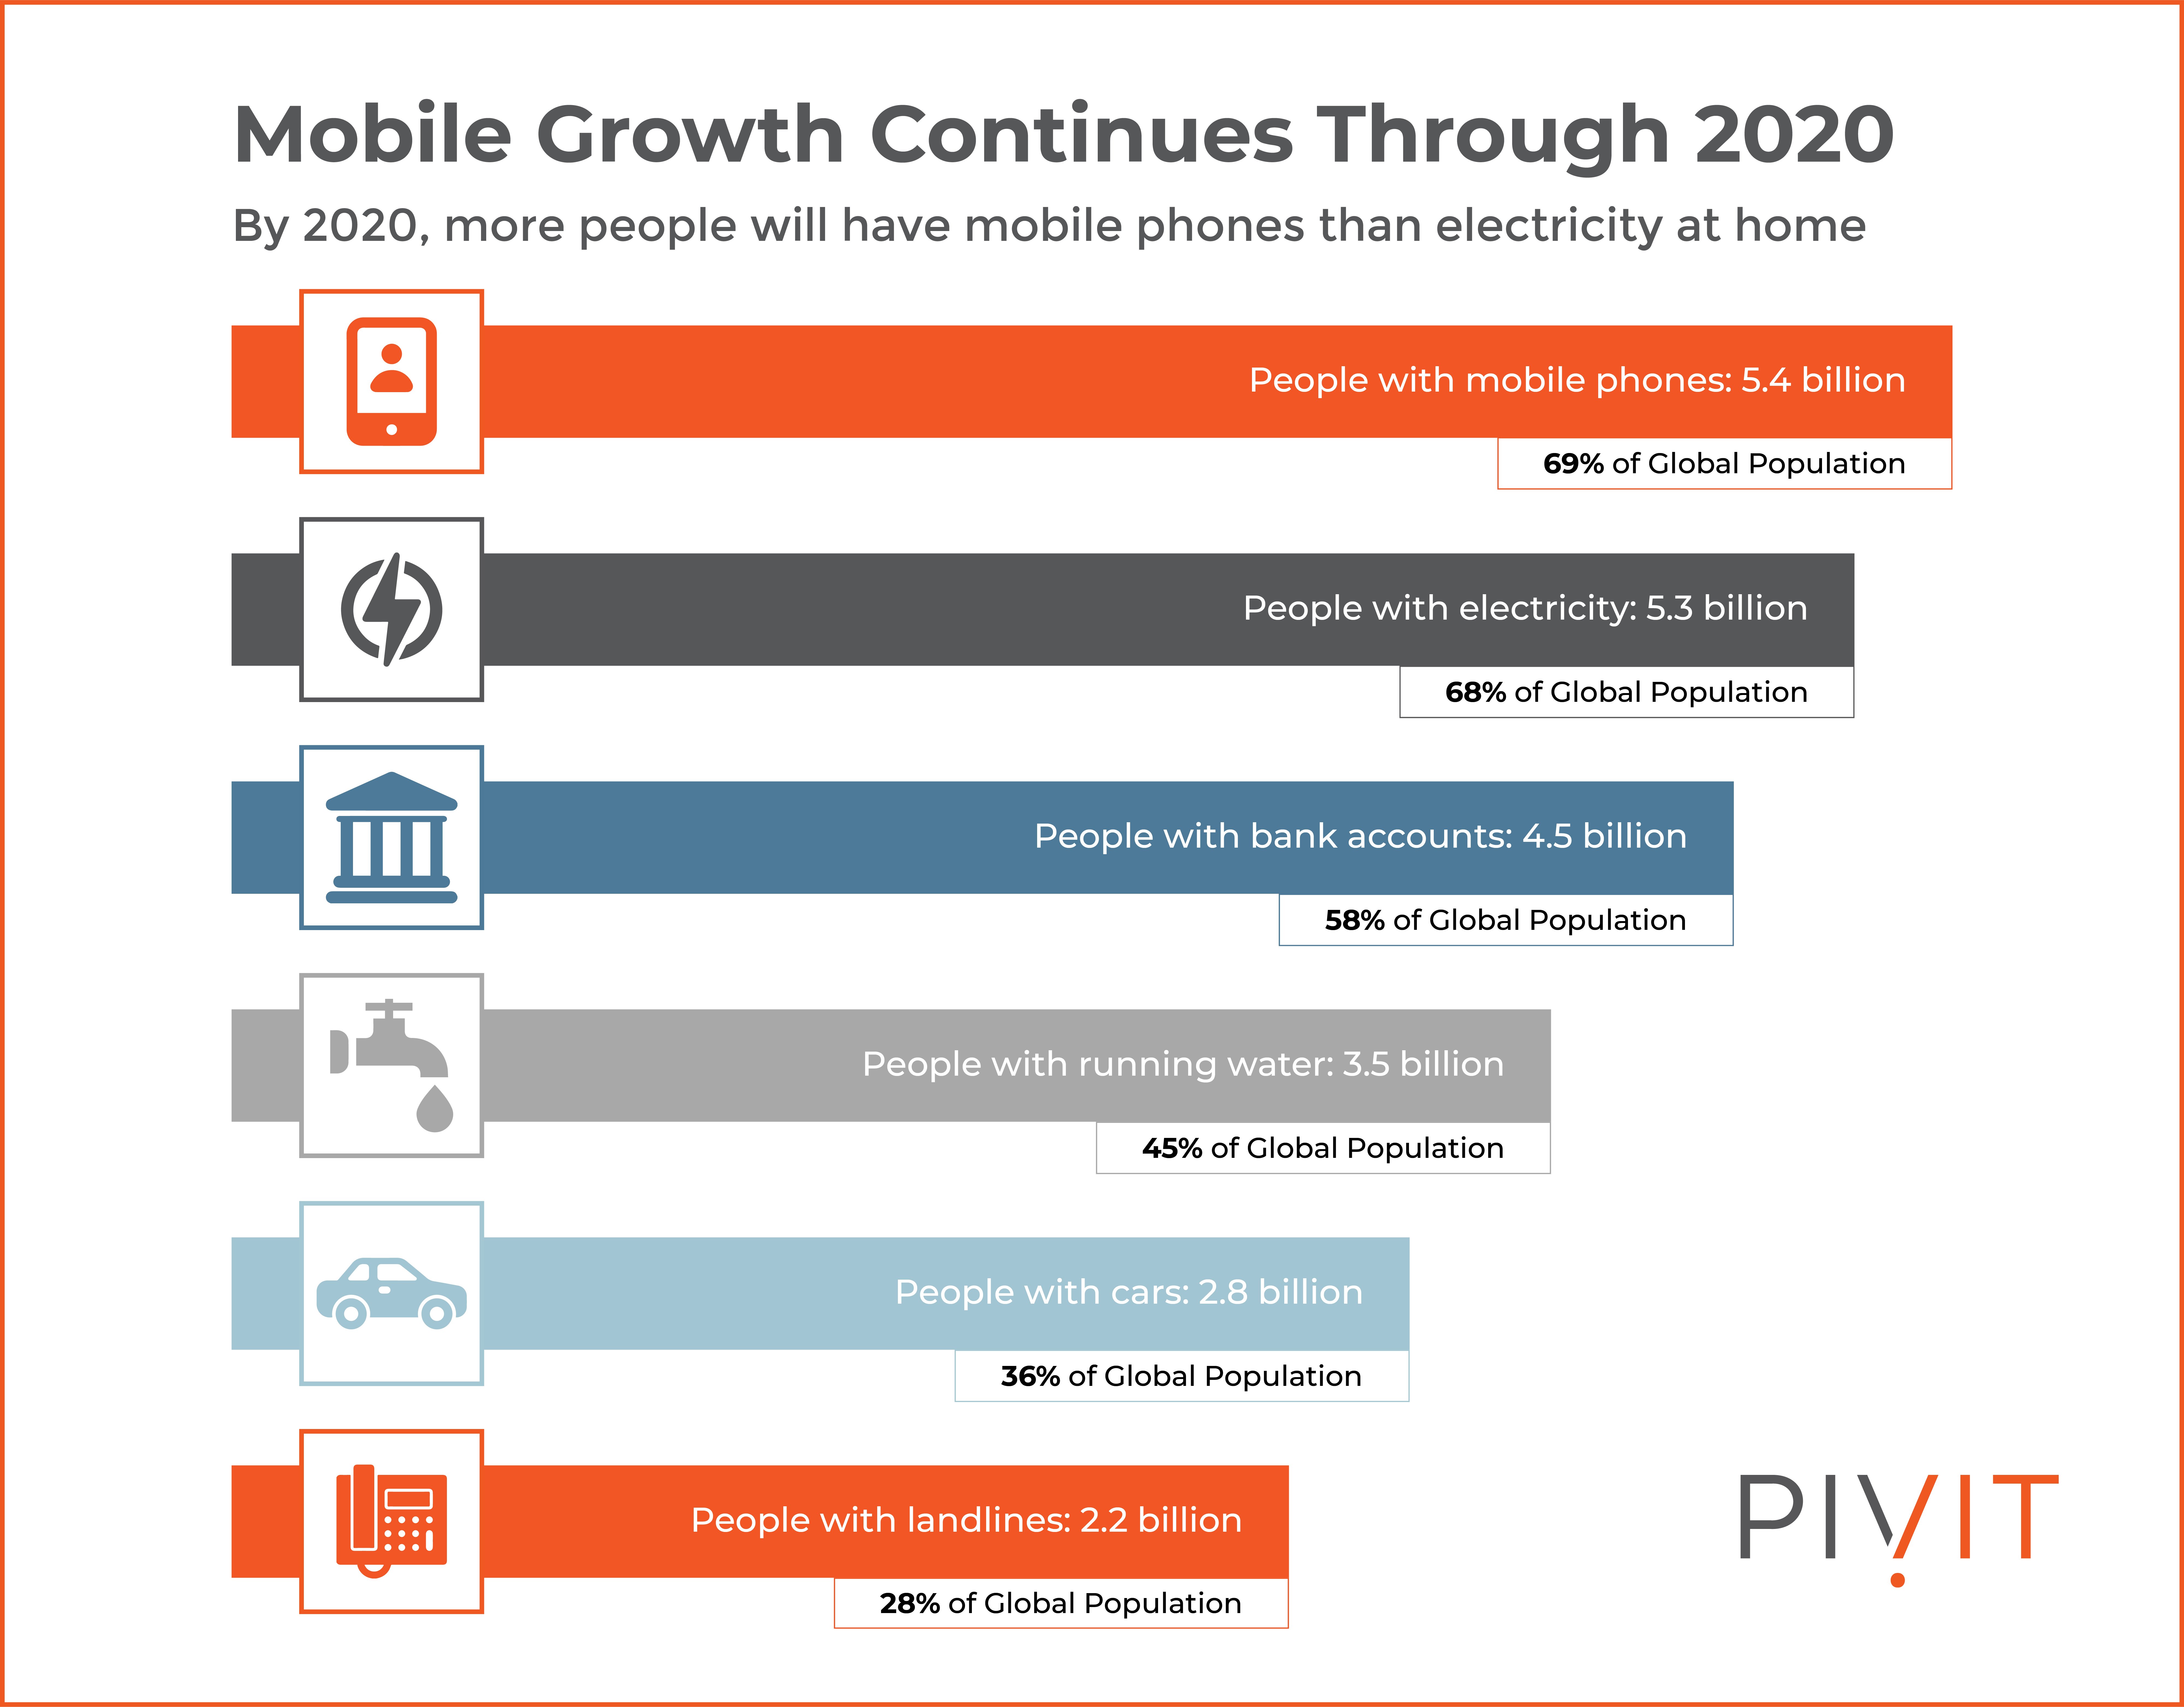 Mobile growth data through 2020